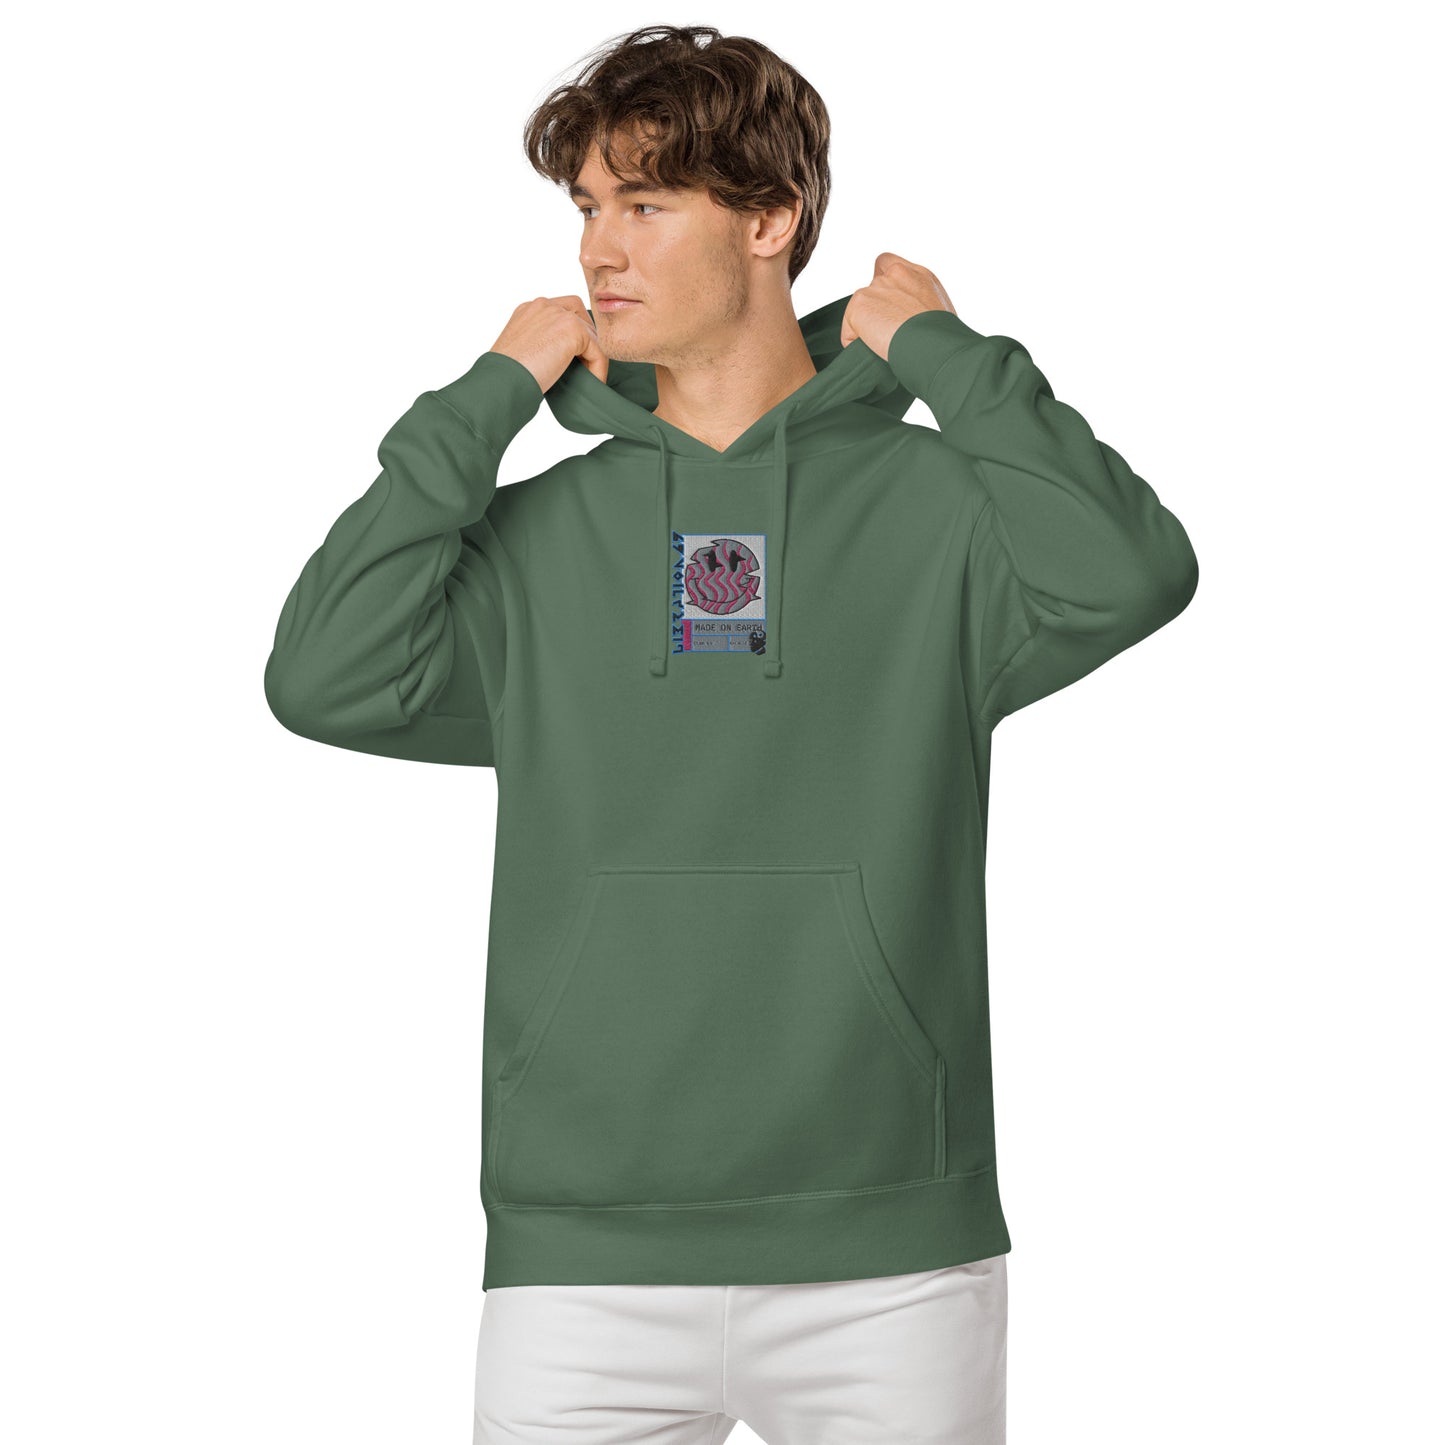 Unisex Pigment dyed hoodie